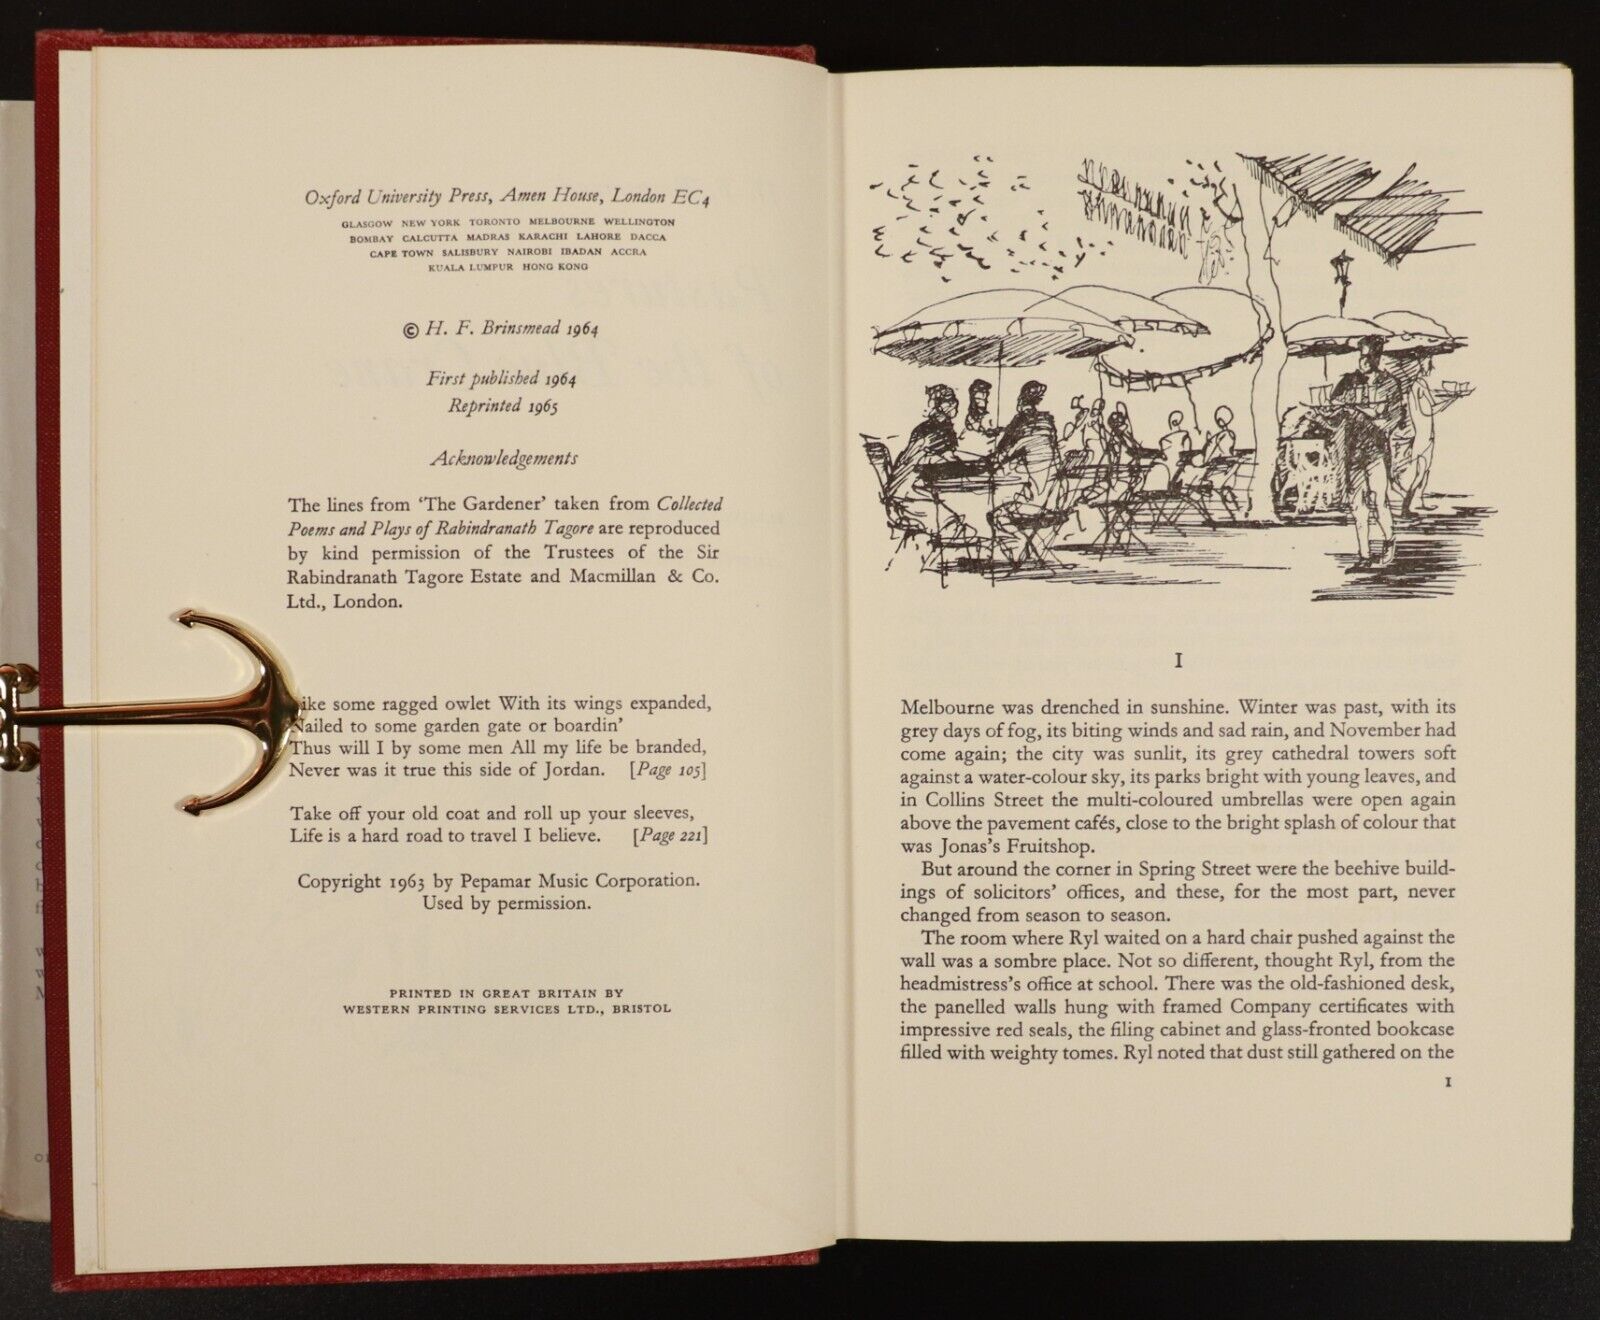 1965 Pastures Of The Blue Crane by H.F Brinsmead Vintage Australian Fiction Book